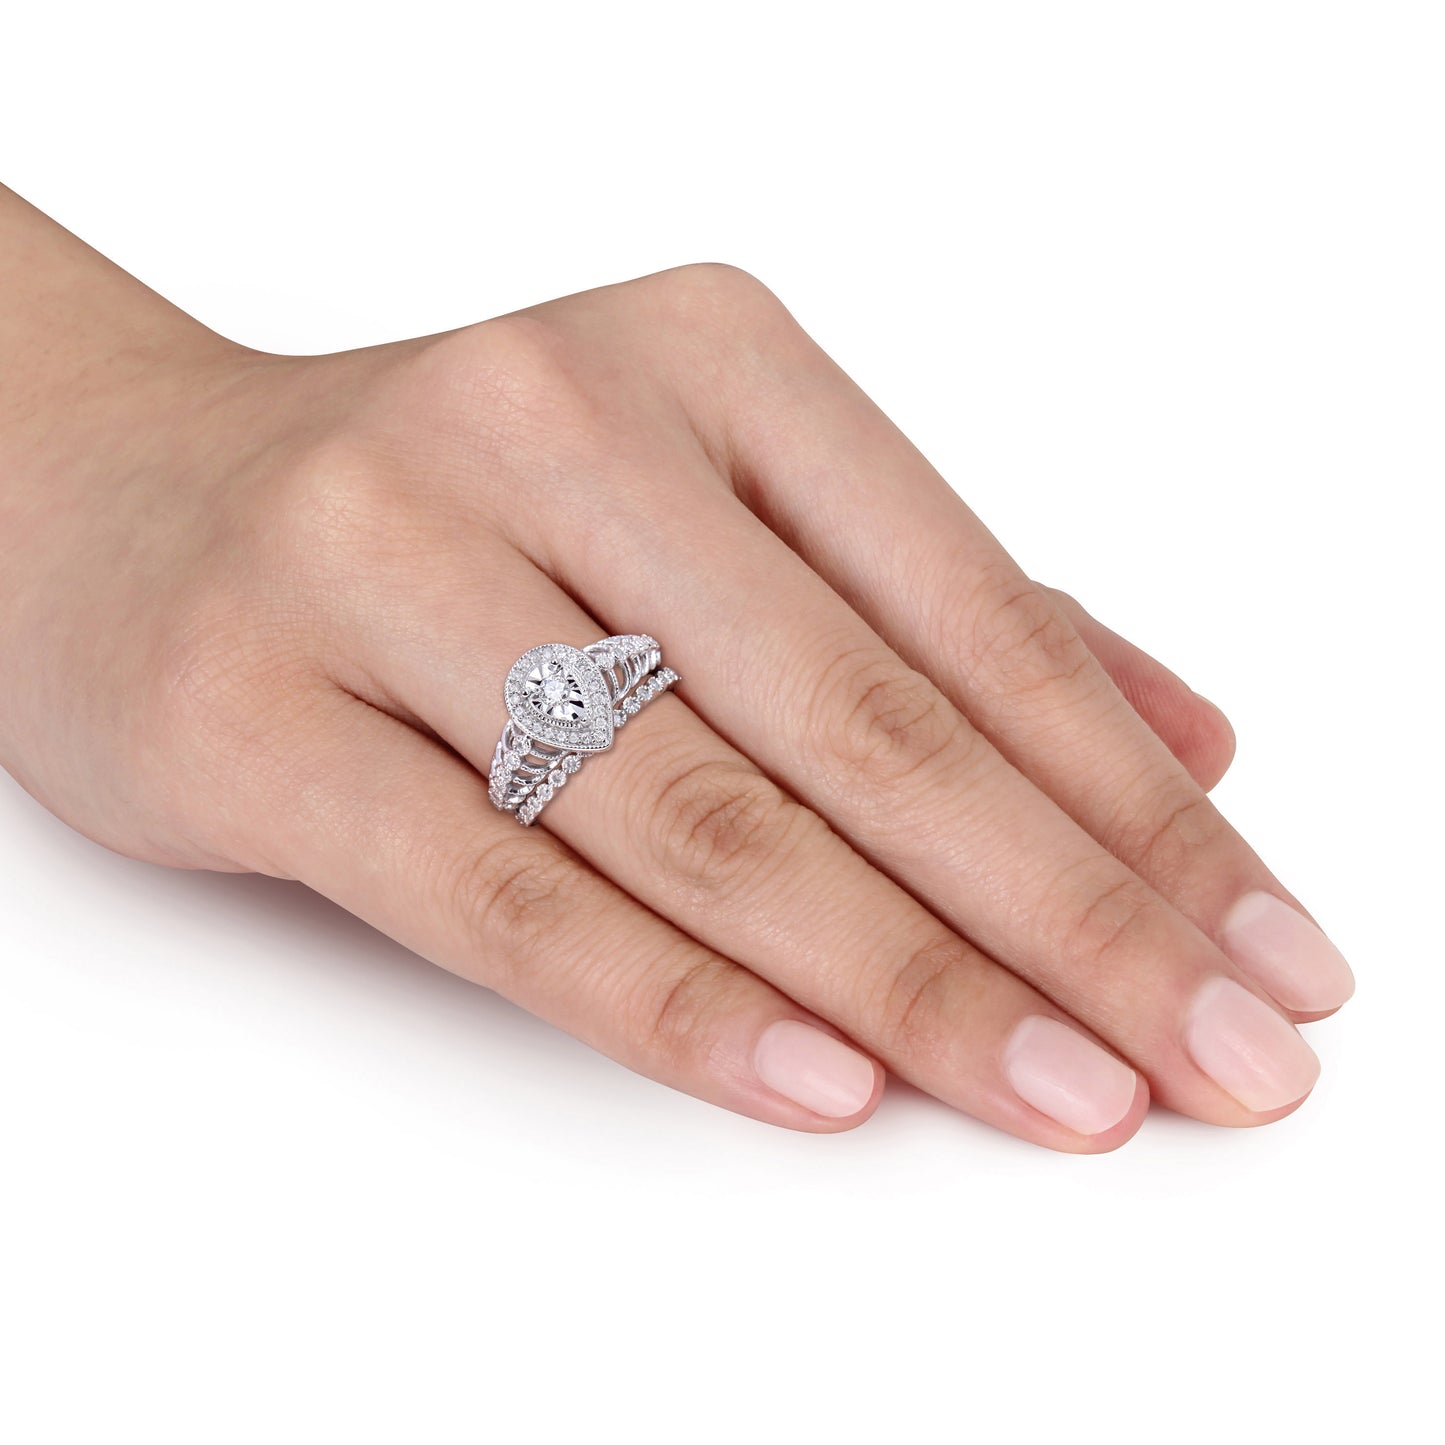 Pear Cut Diamond Bridal Set in Sterling Silver